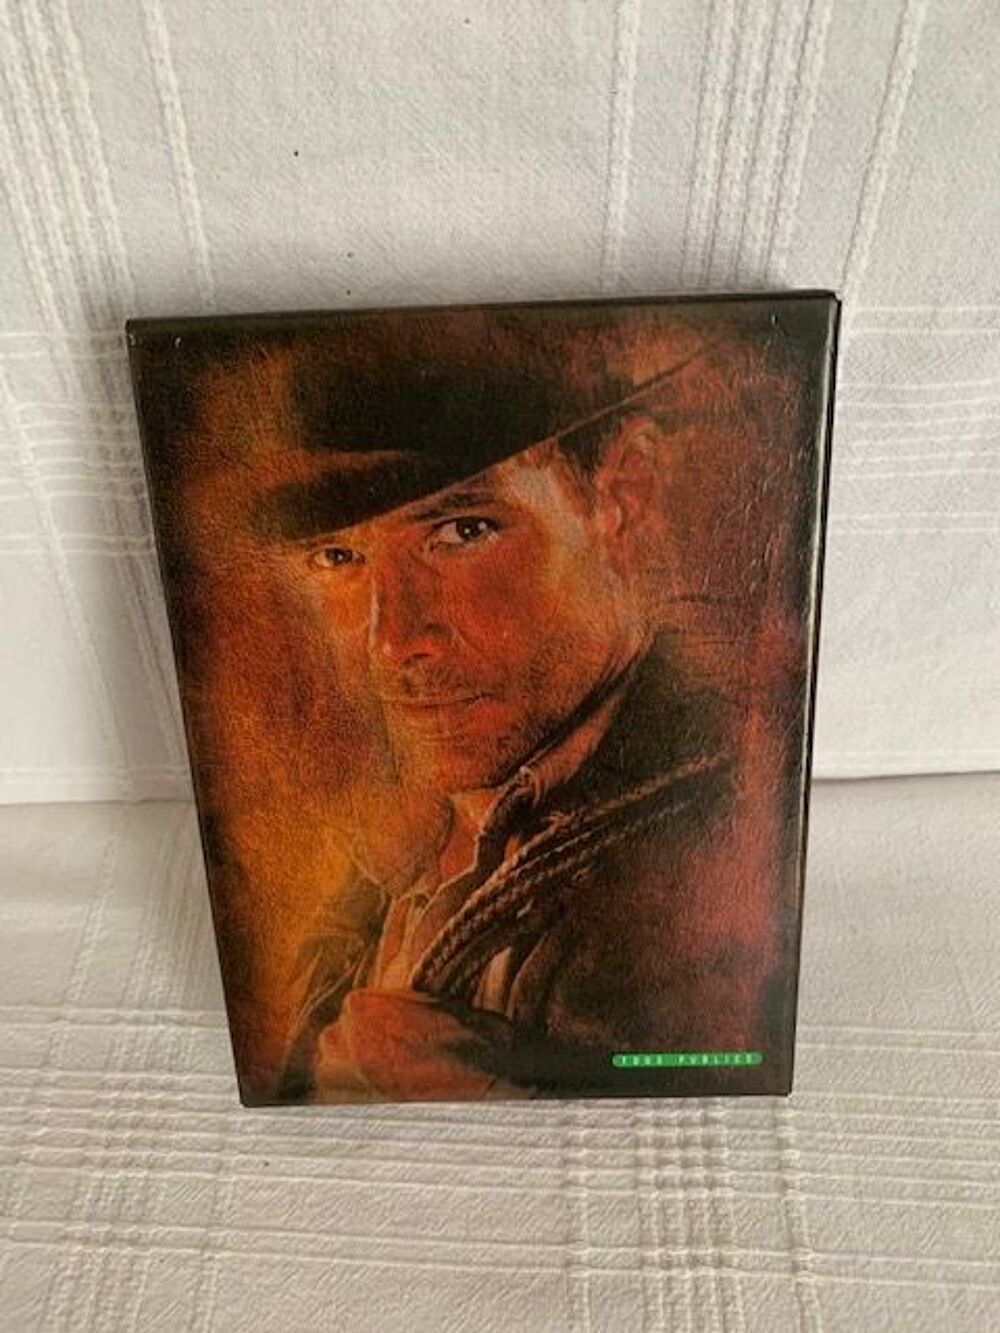 *A321 
Les Aventures d'Indiana Jones DVD et blu-ray